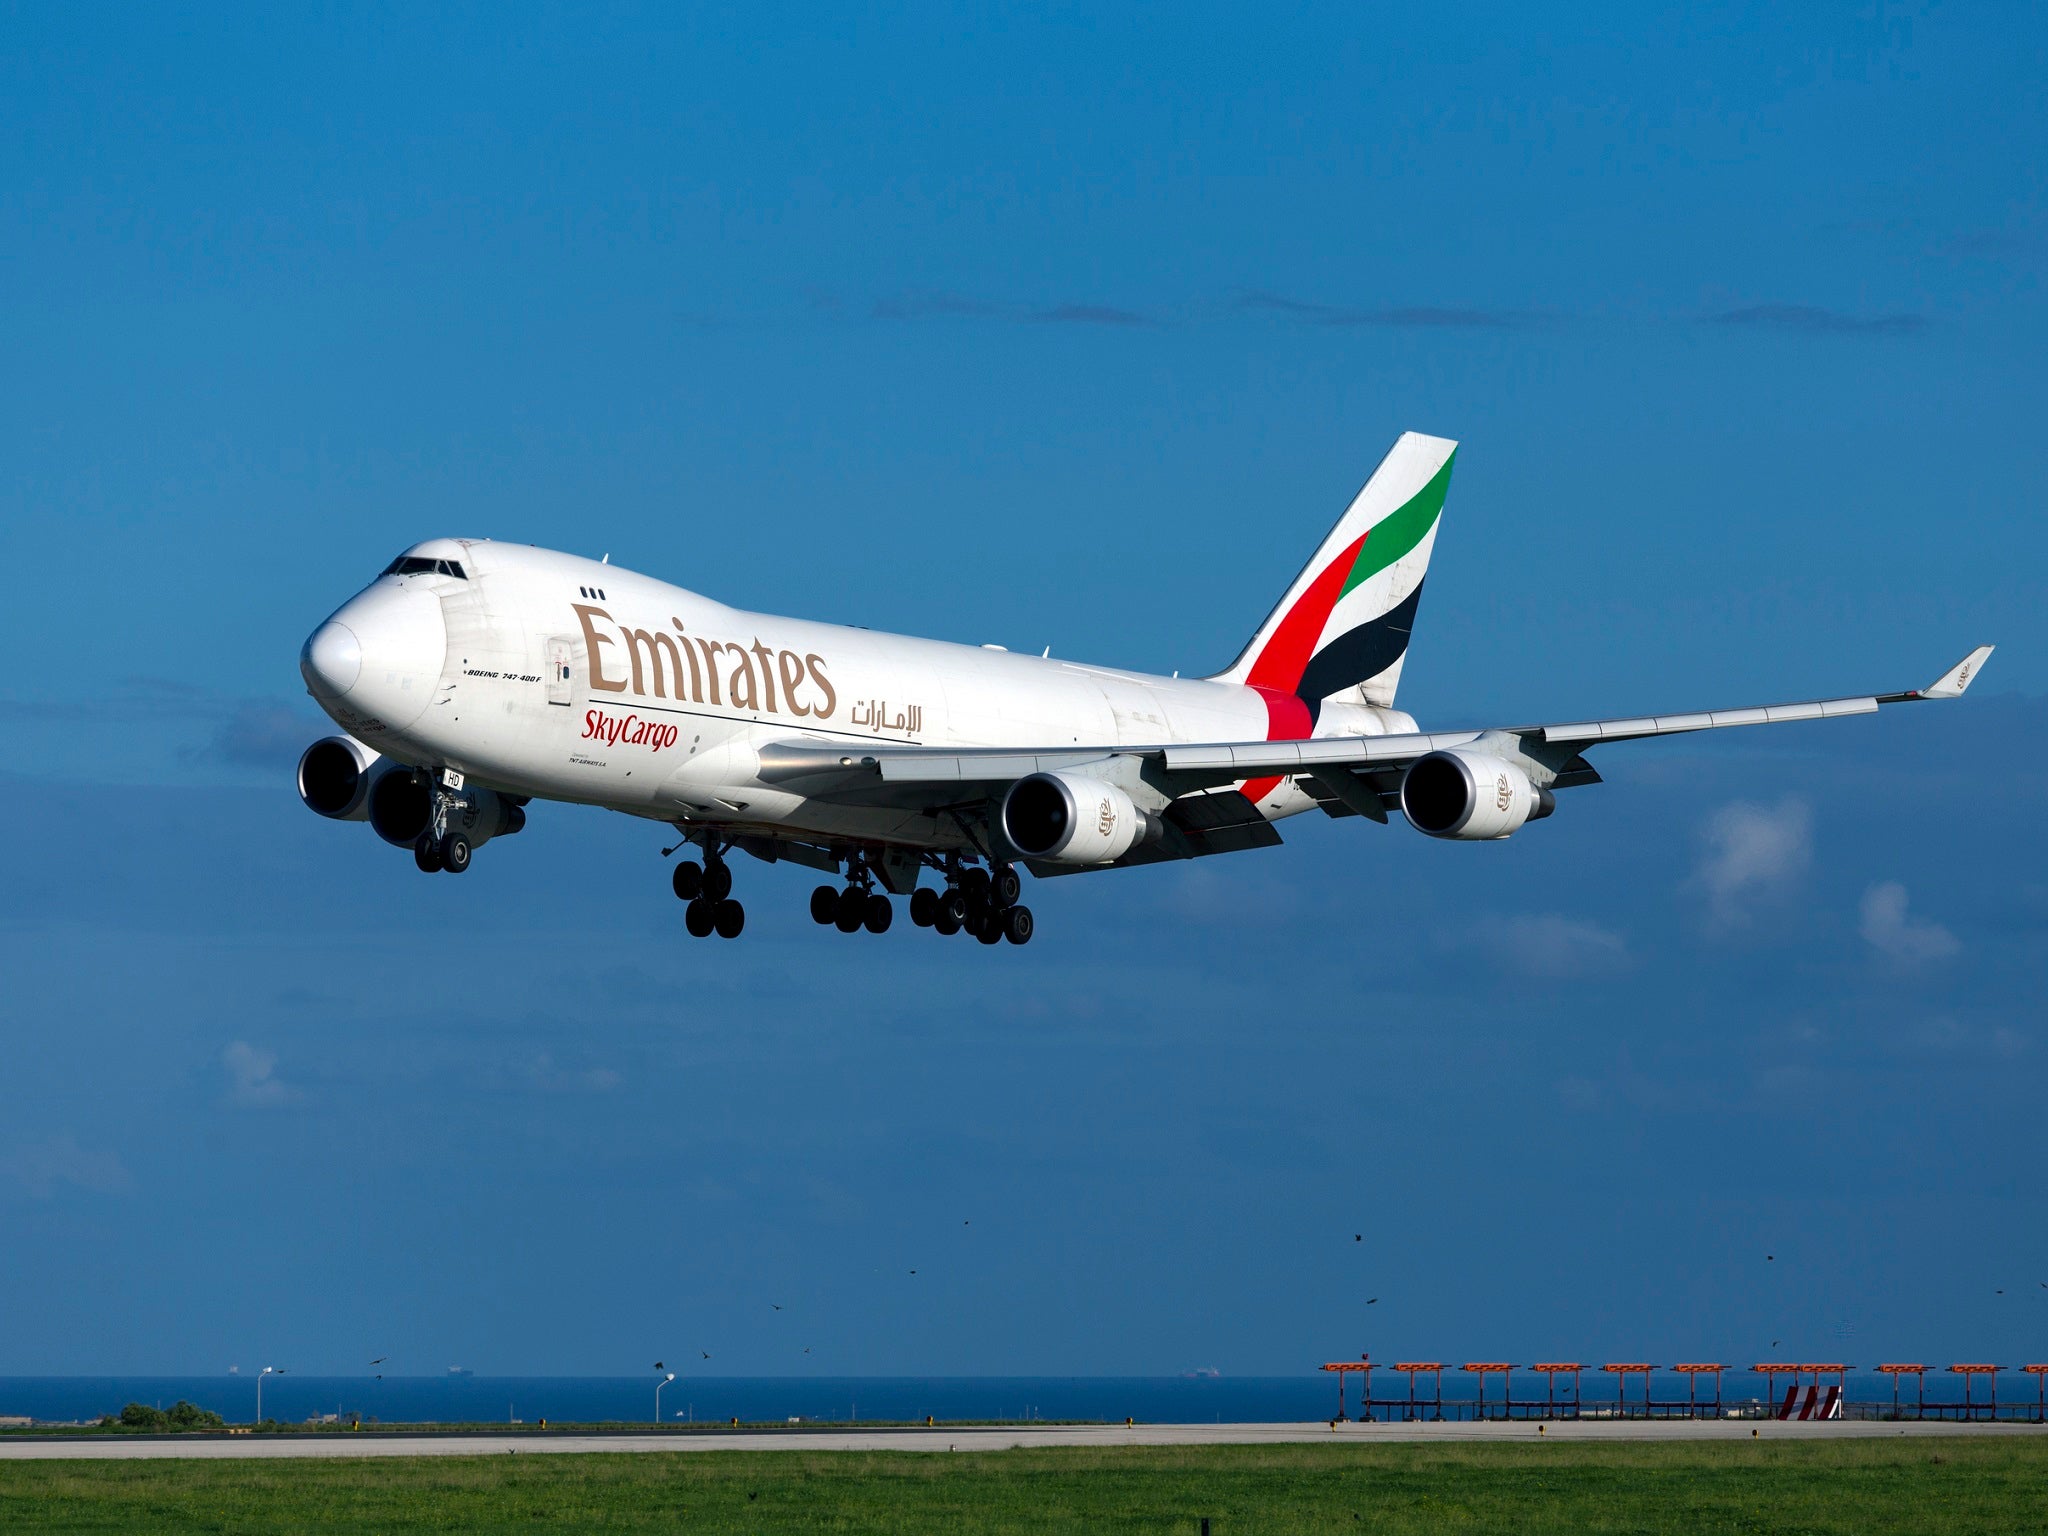 Giorgio Destro is suing the Emirates airline for €2,800